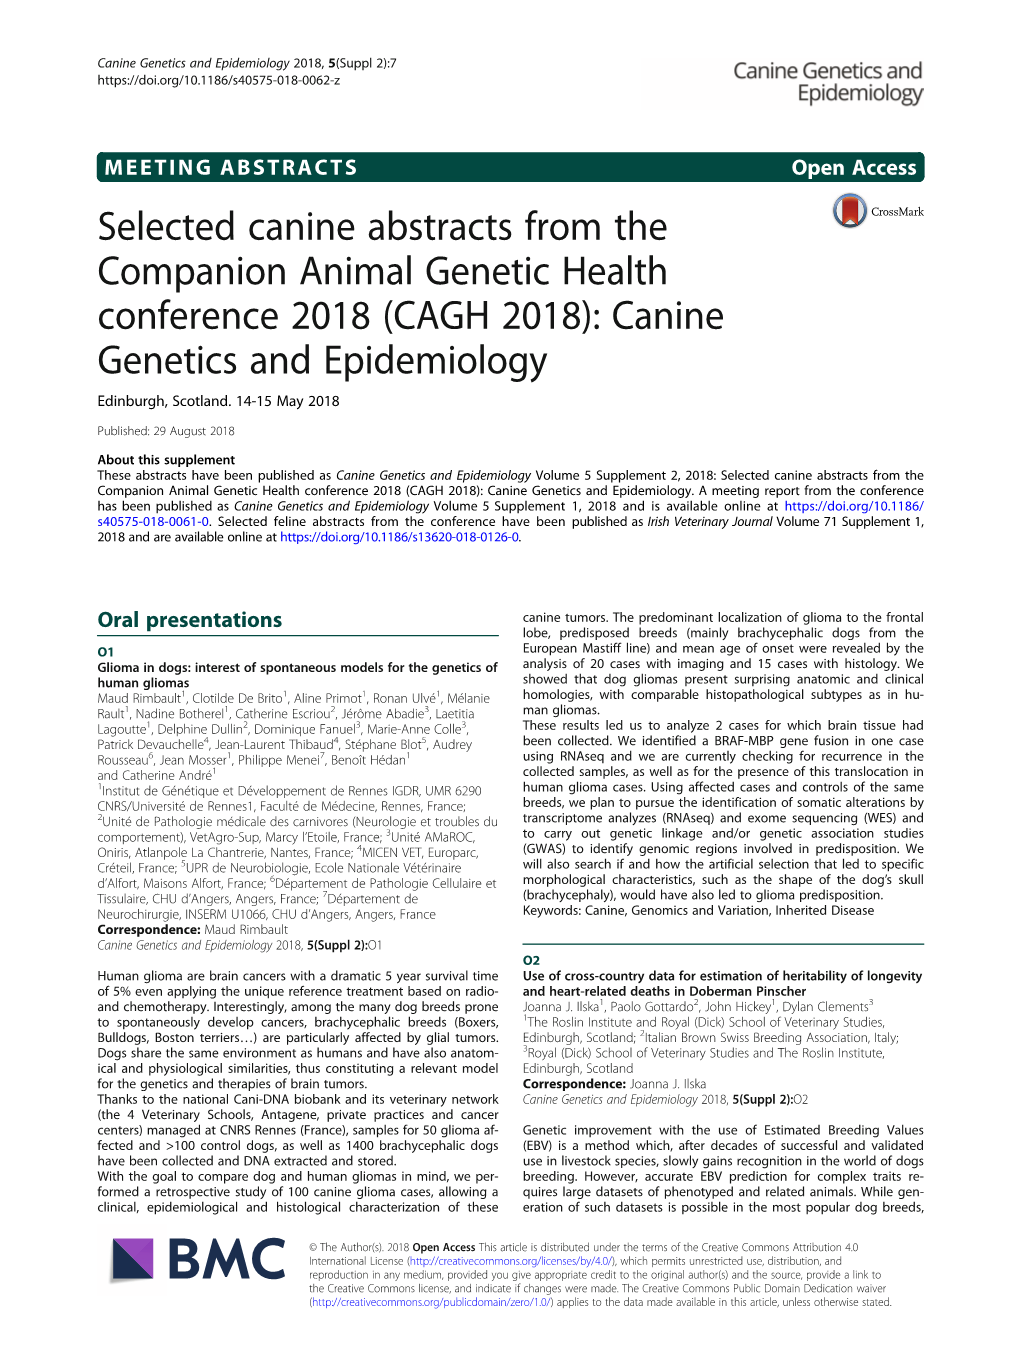 (CAGH 2018): Canine Genetics and Epidemiology Edinburgh, Scotland